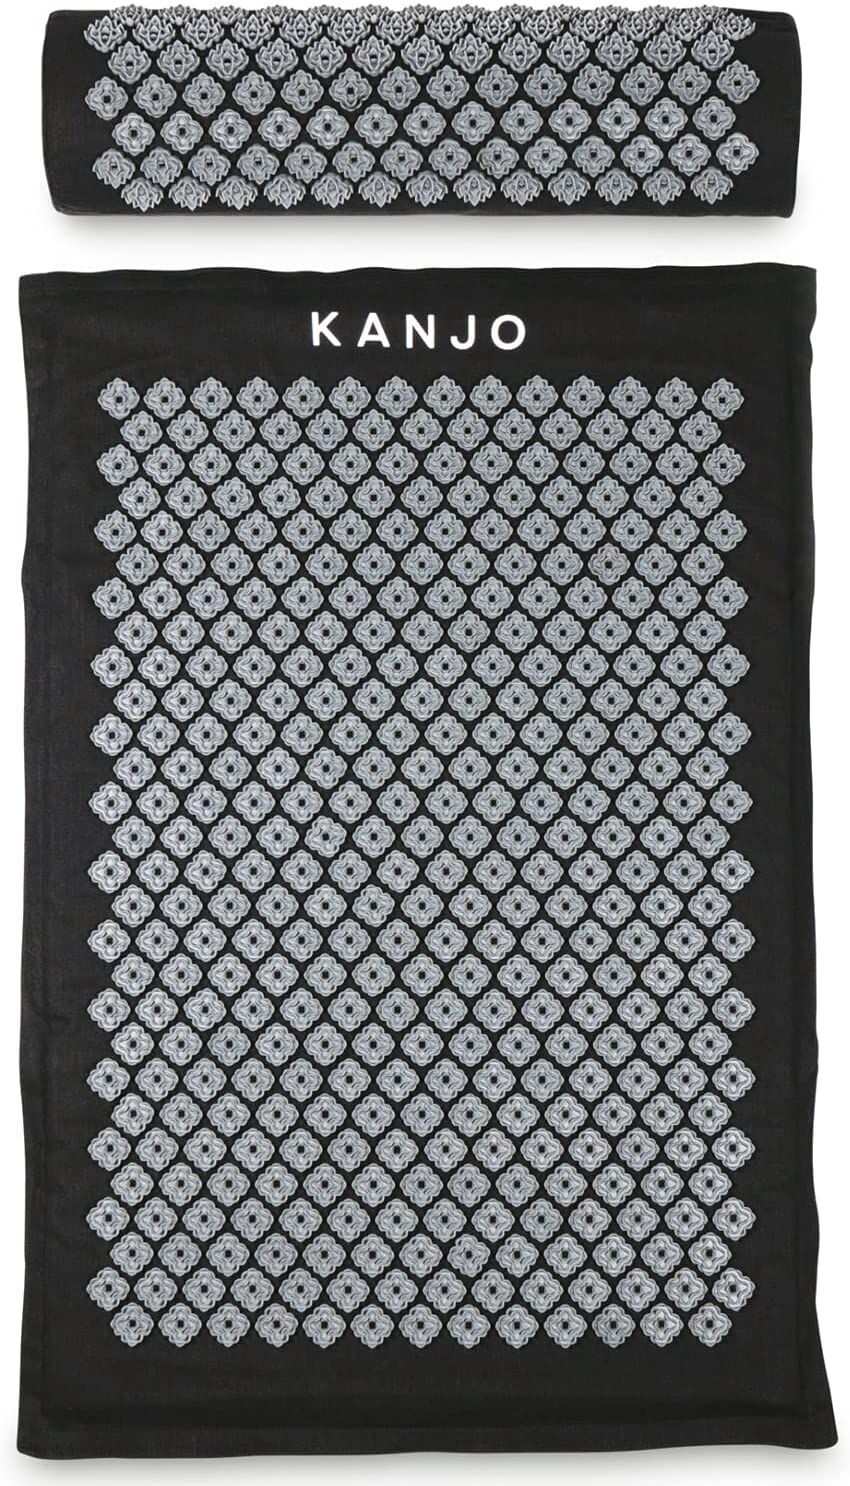 Kanjo Large Memory Foam Acupressure Mat Set - Black